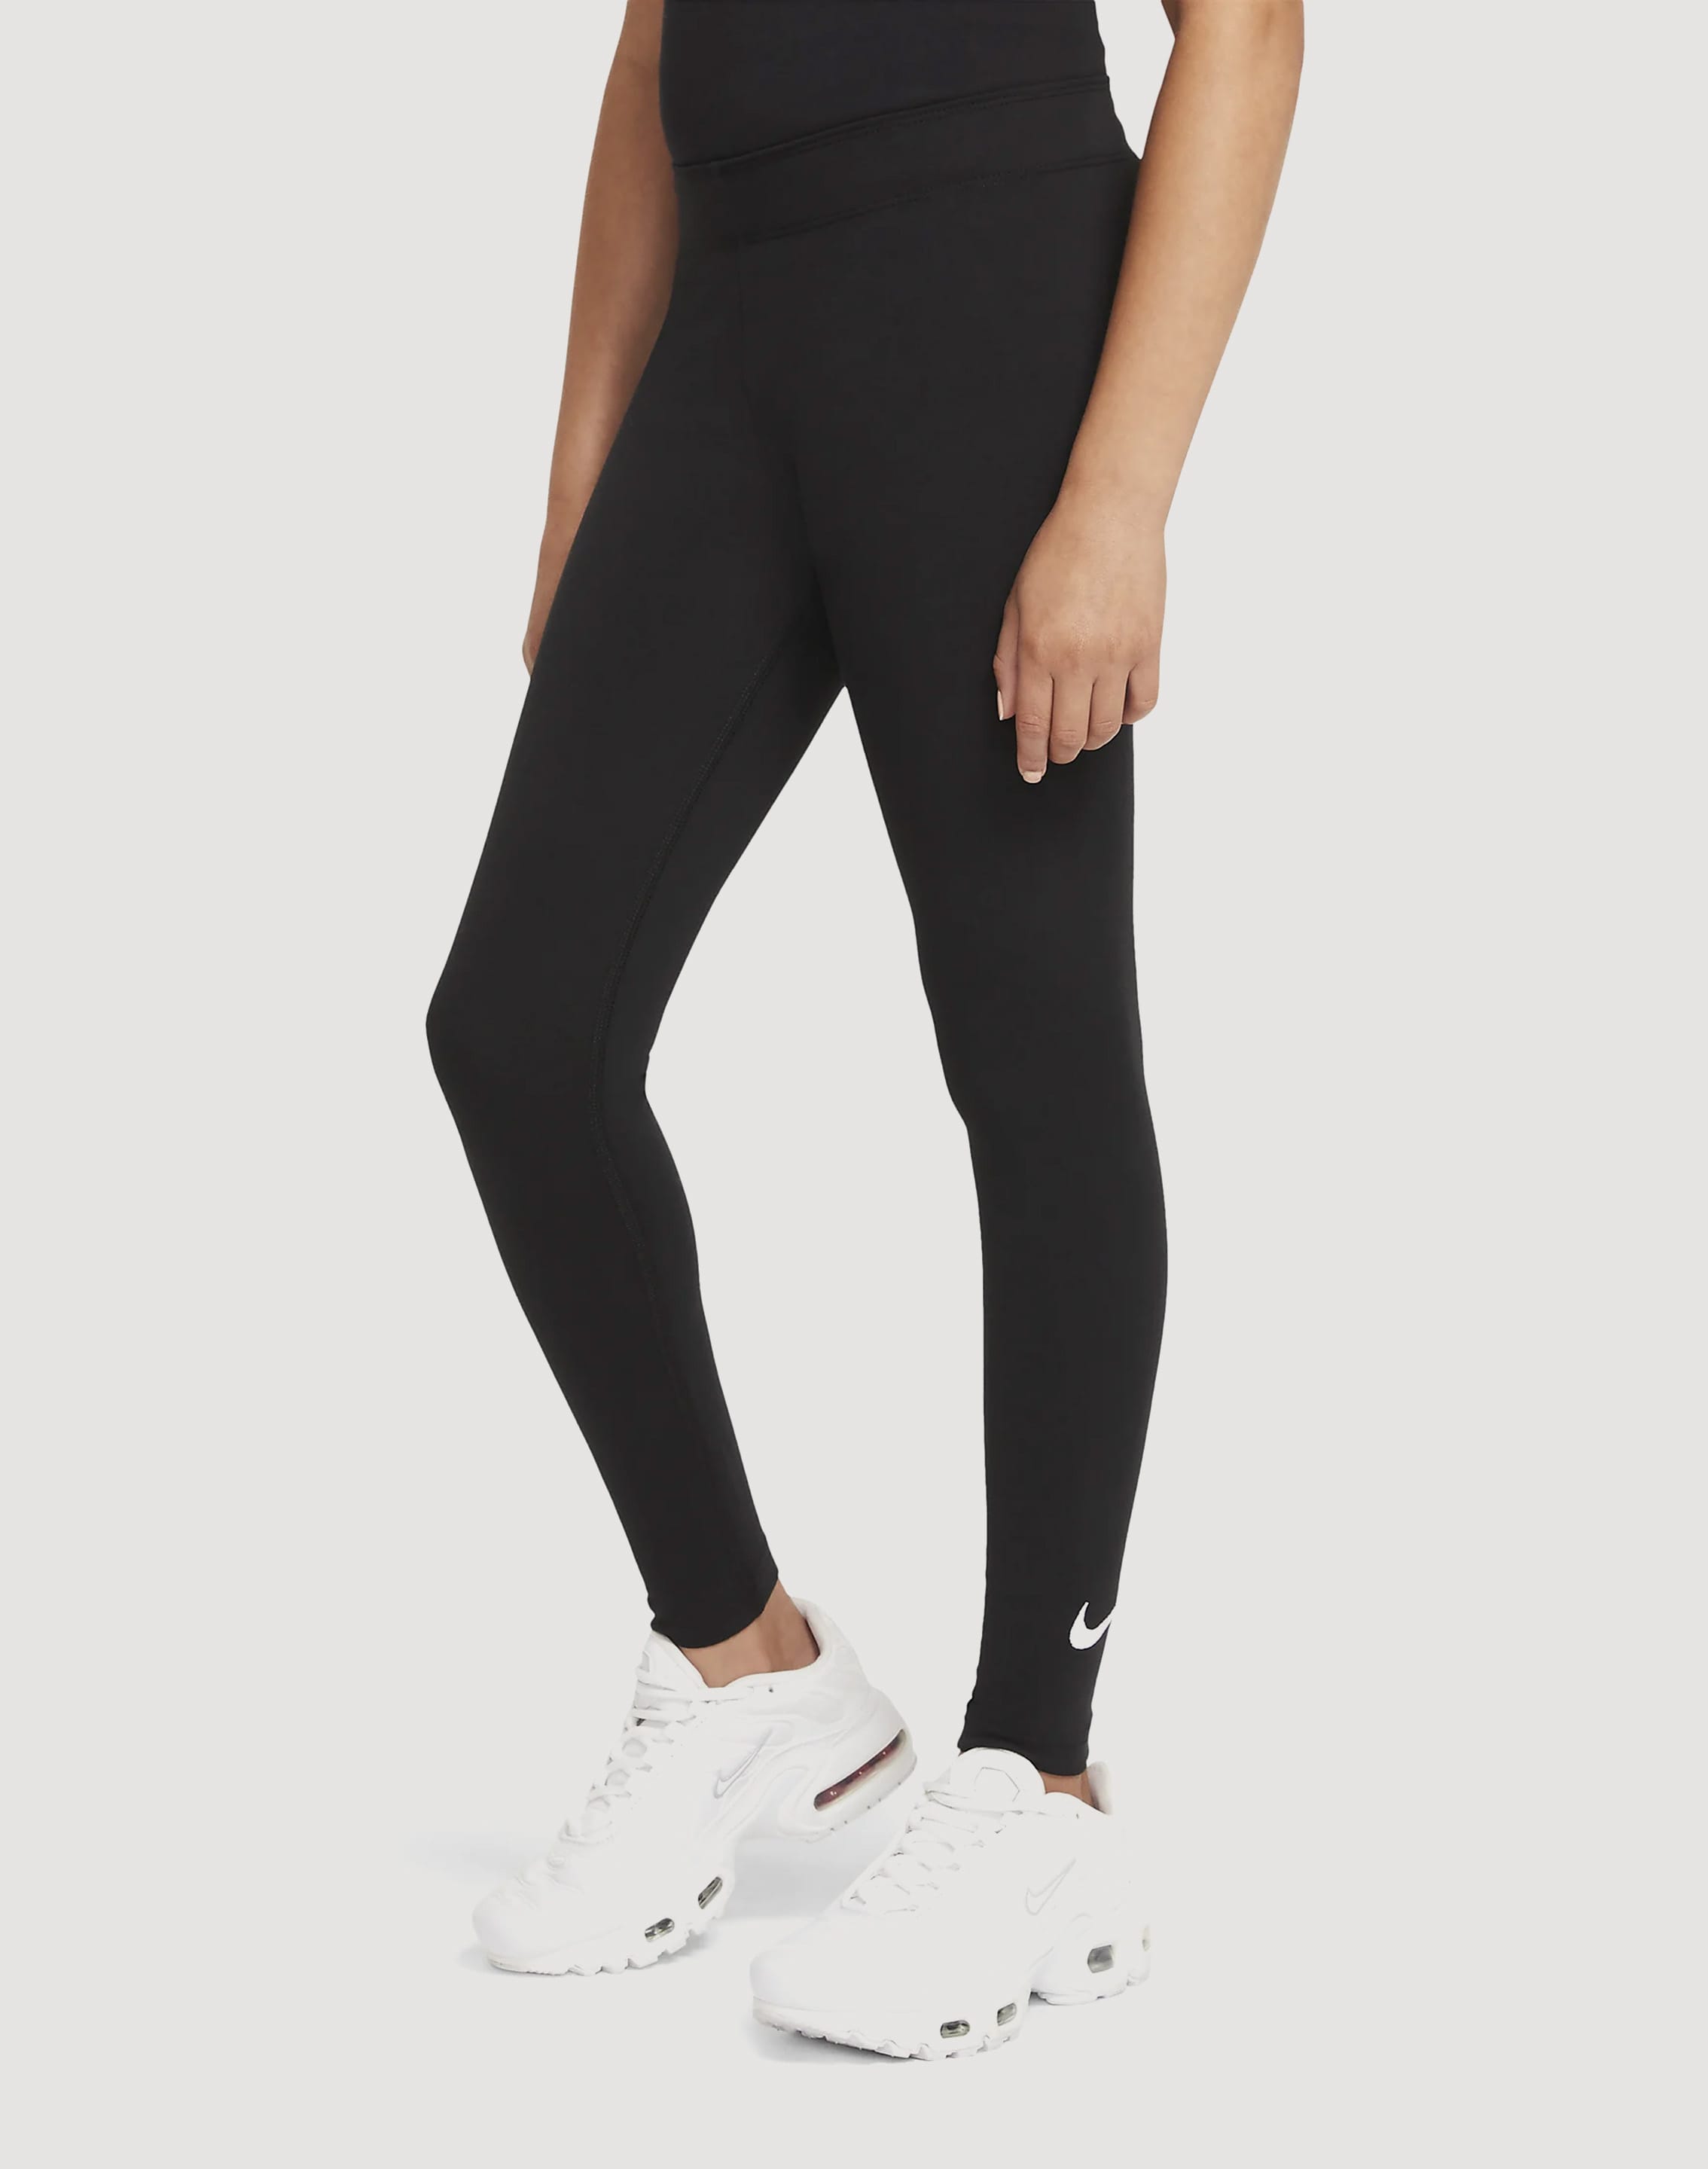 Nike Women's Swoosh Leggings Black